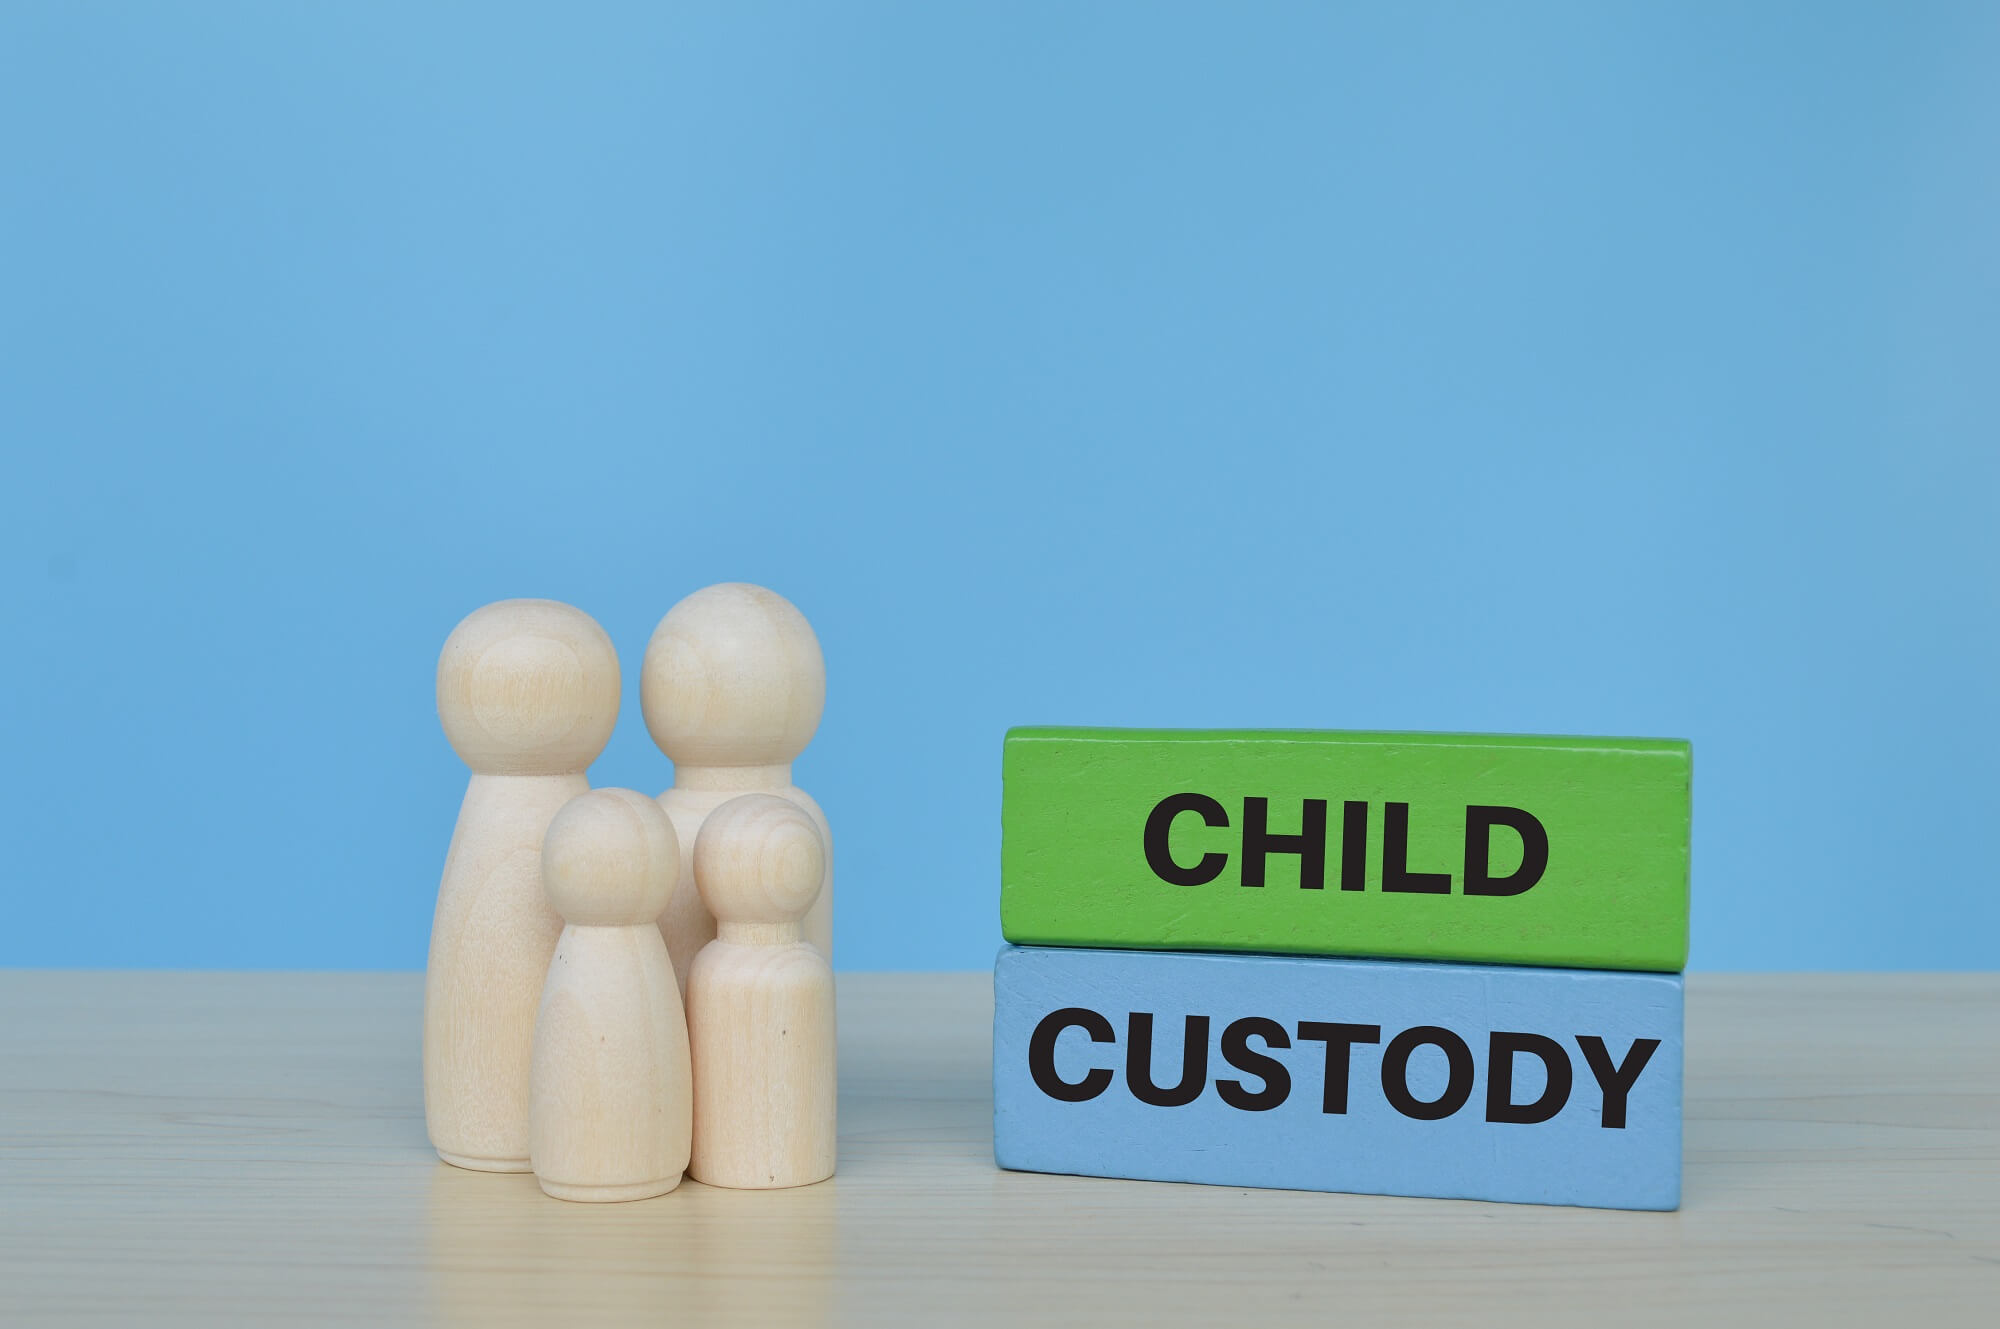 Figures of parents and children next to the child custody designation.